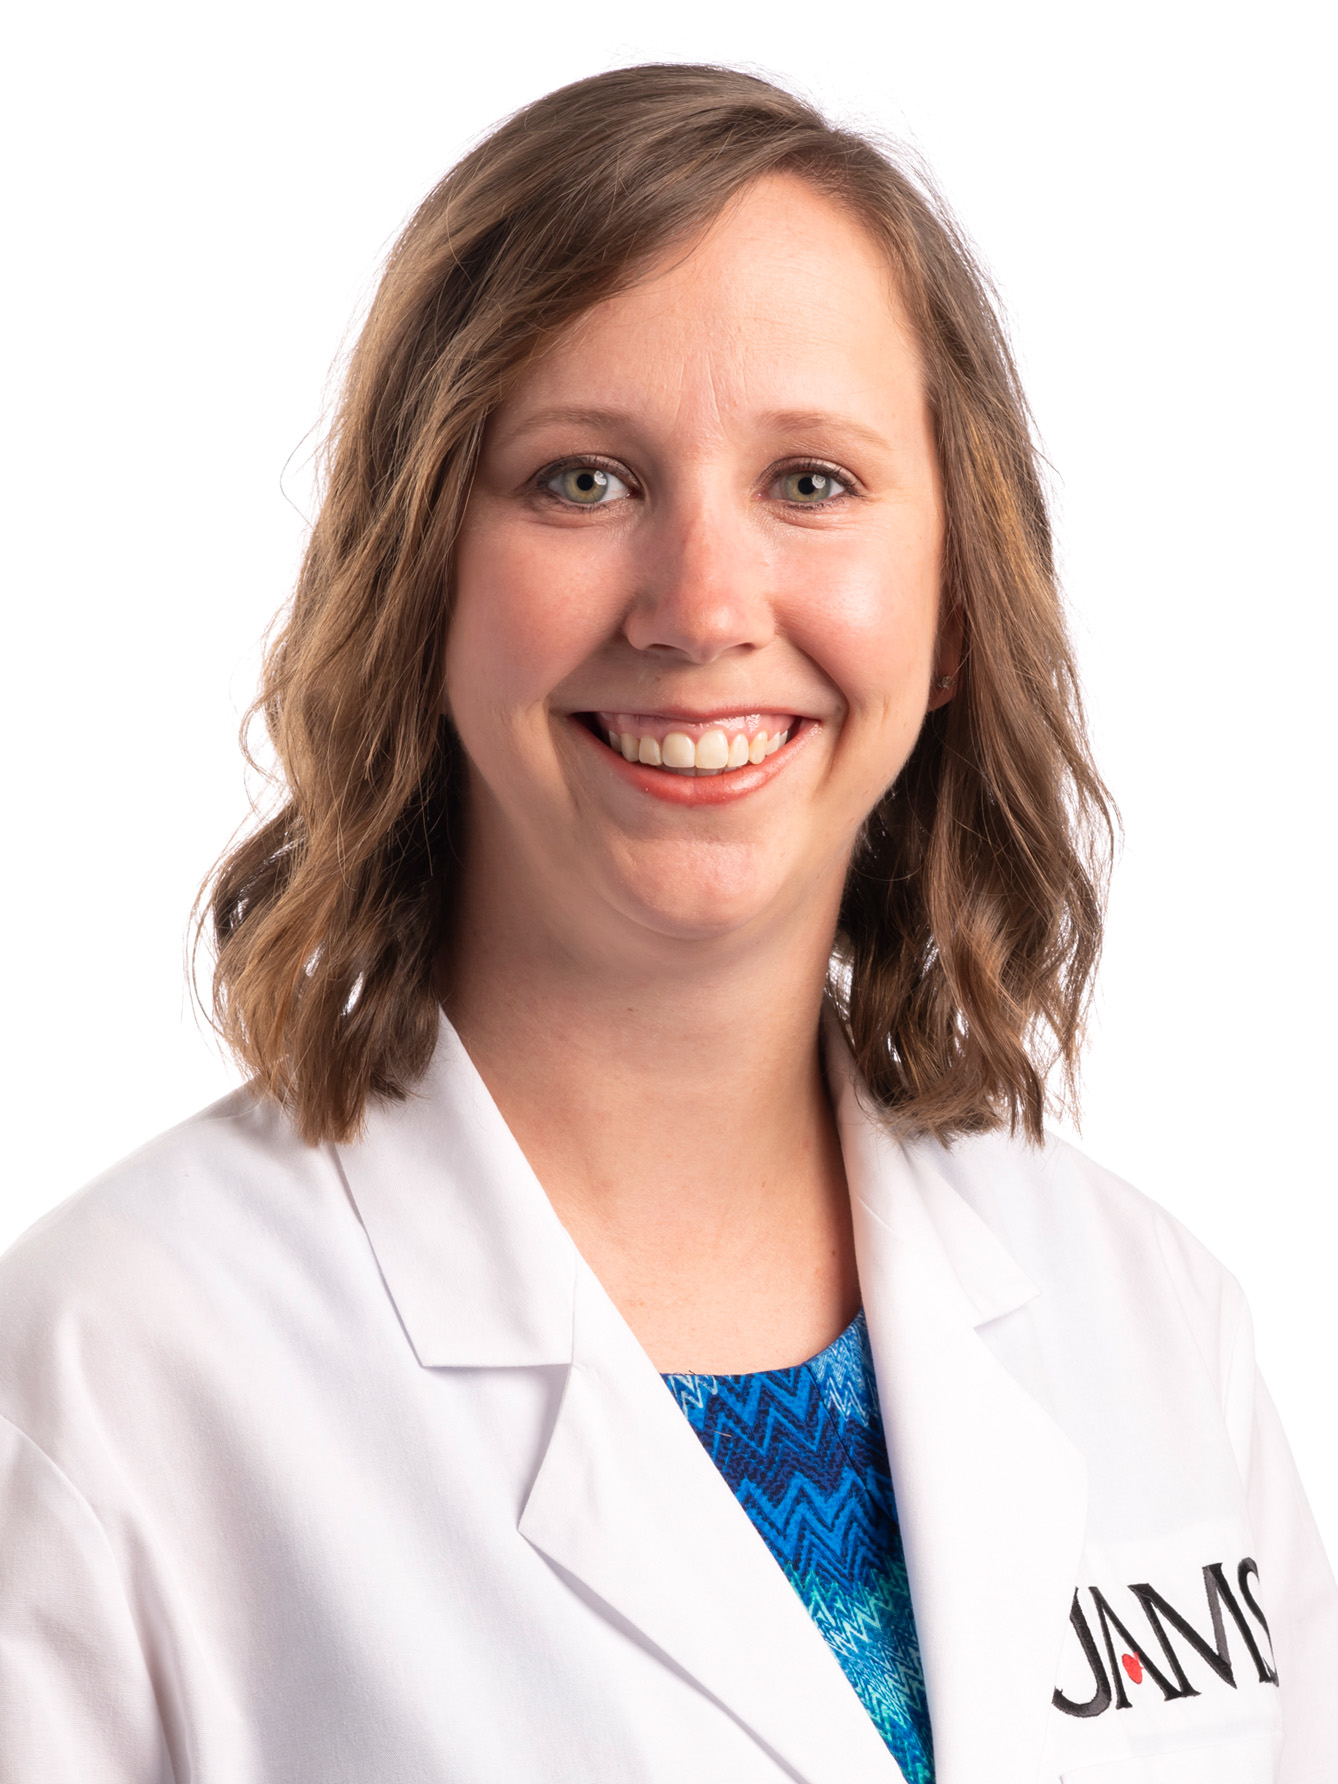 Laura E. Carroll, M.D. | UAMS Health